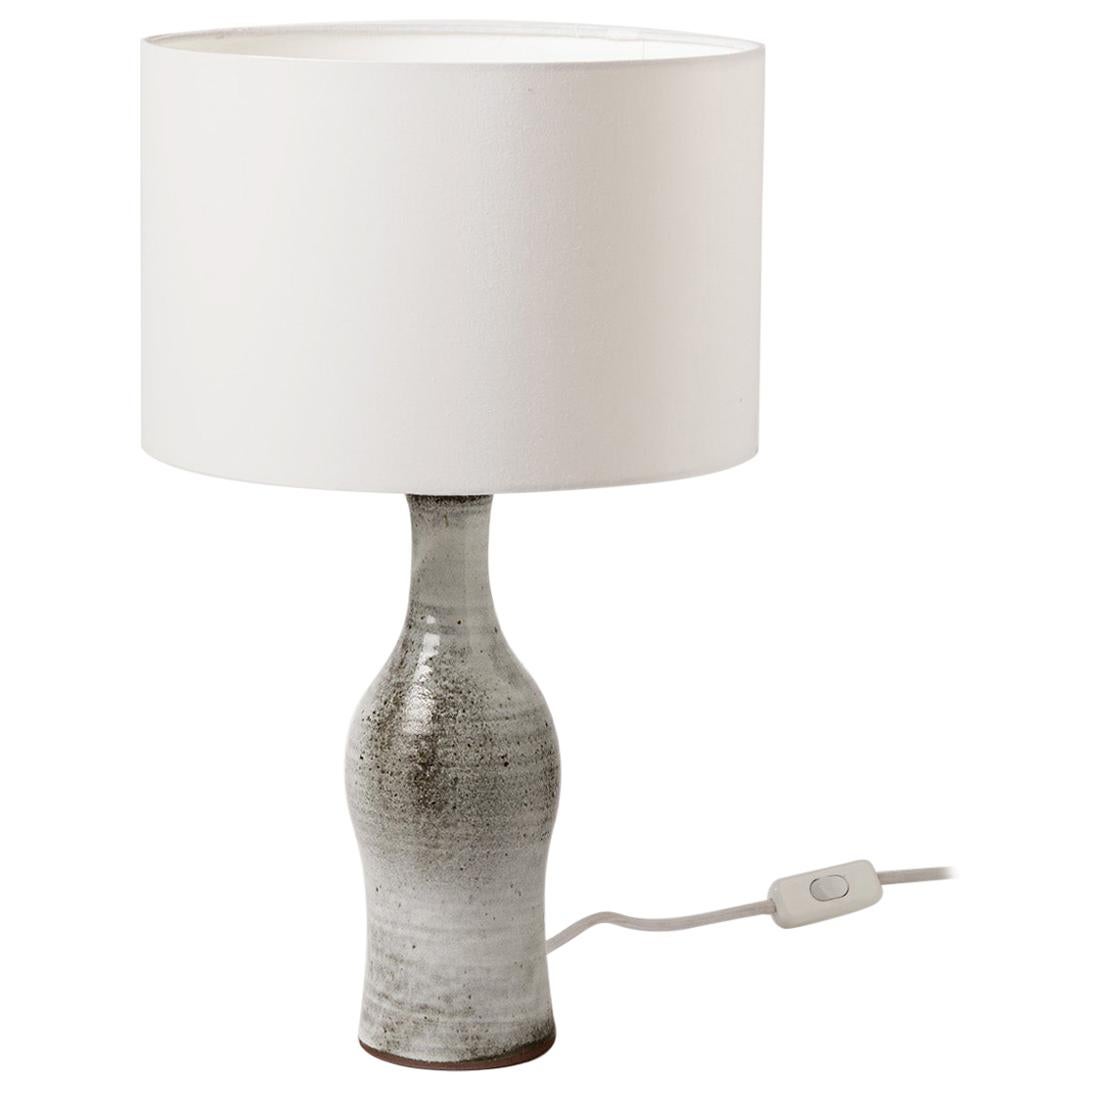 Norbert Pierlot circa 1950 Elegant White and Grey Ceramic Table Lamp Design For Sale